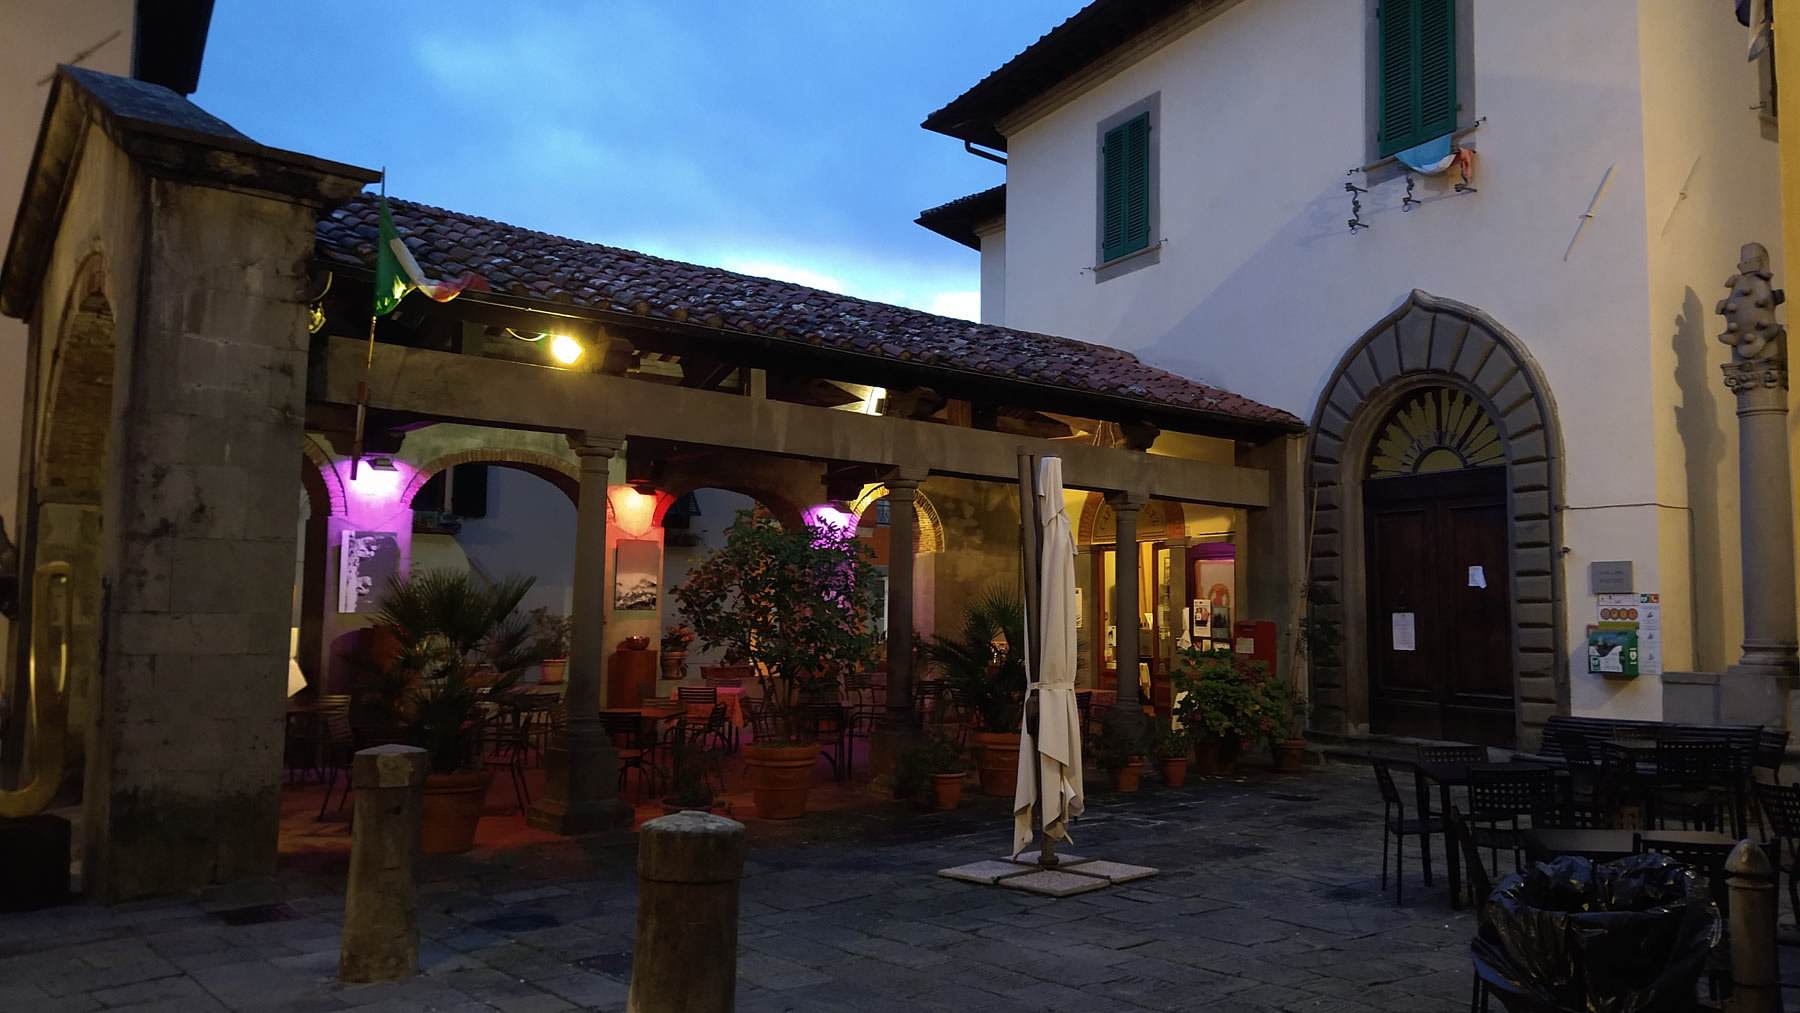 The Market Loggia, now home to the Capretz Cafe. Ph. Credit Finestre Sull'Arte